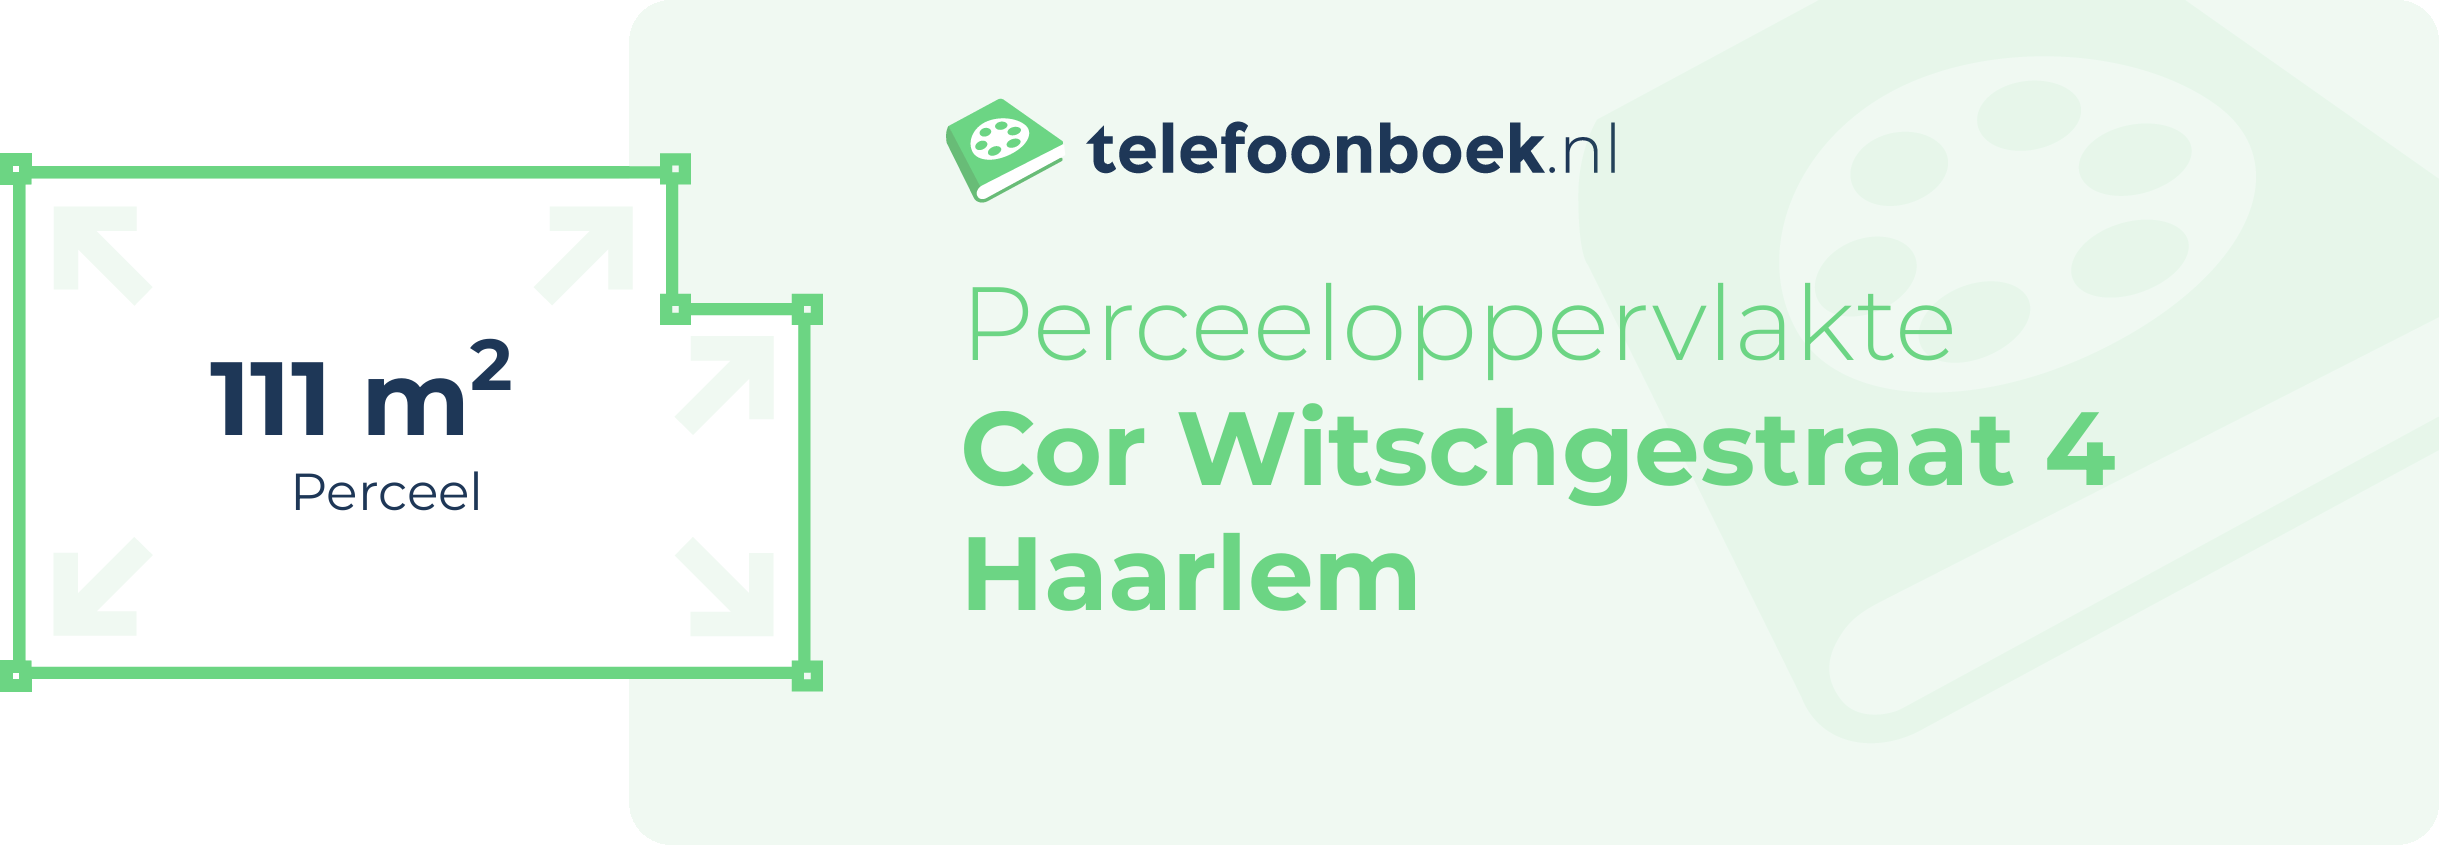 Perceeloppervlakte Cor Witschgestraat 4 Haarlem